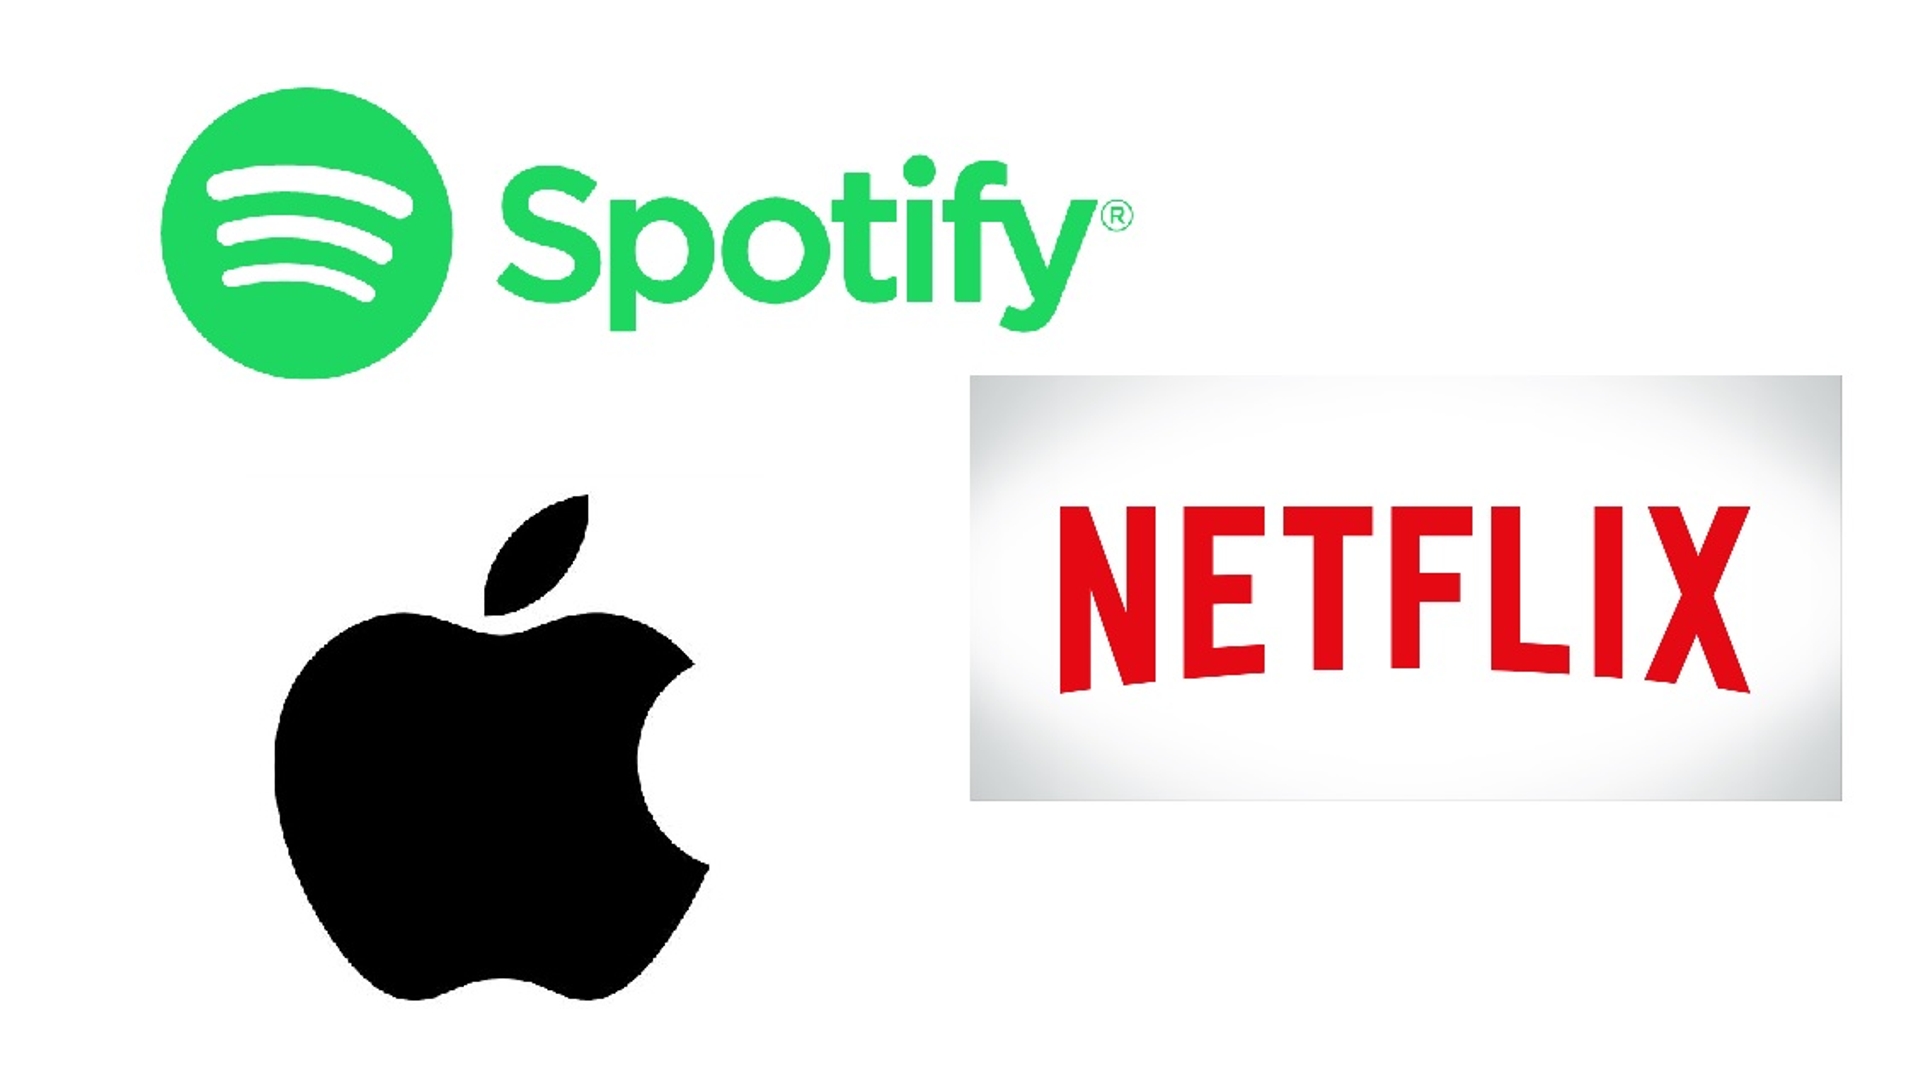 Spotify Apple Netflix logo's